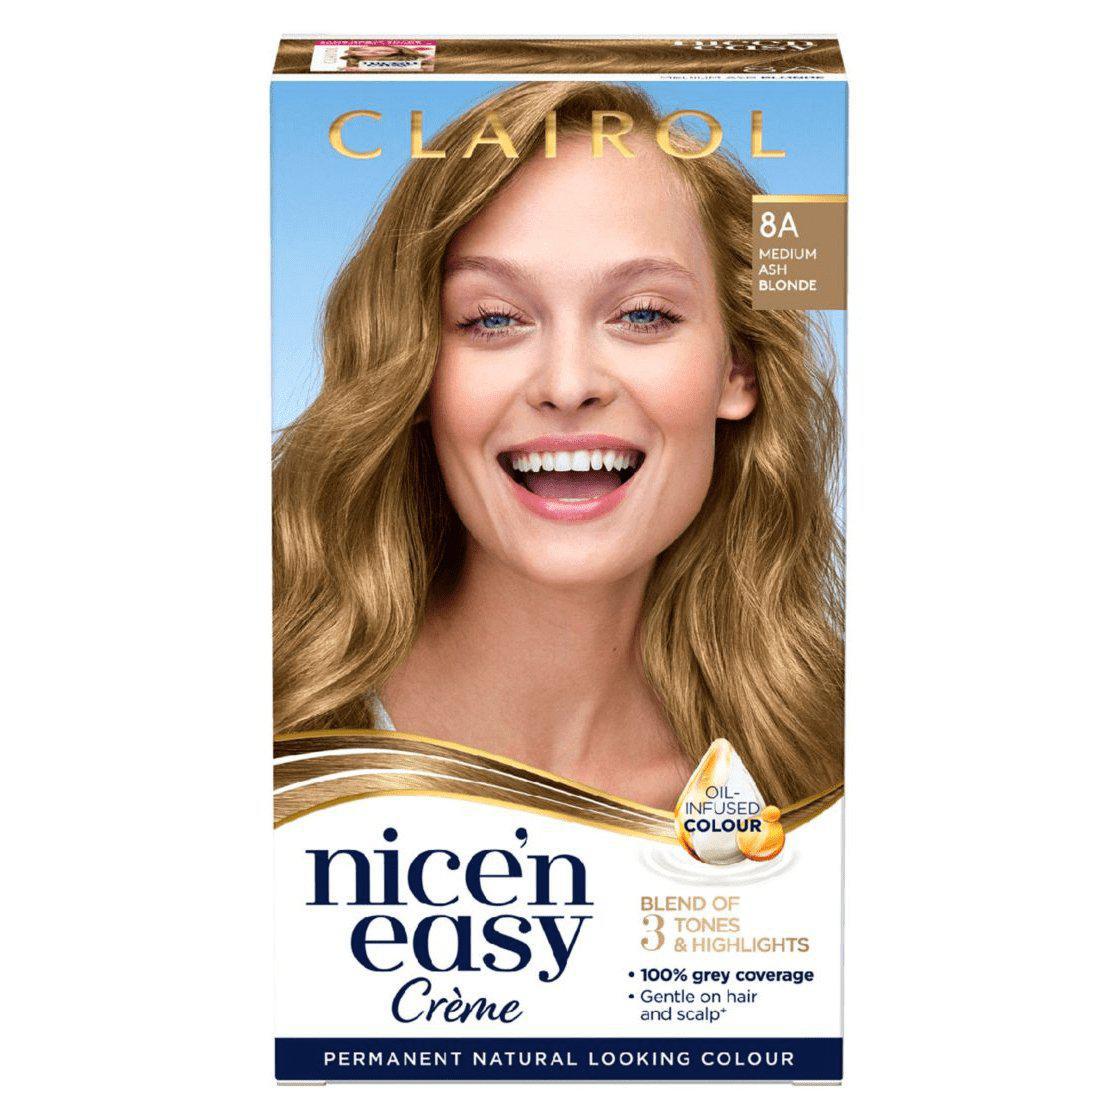 Clairol Nice N Easy Crème Natural Permanent Hair Dye - 8A Medium Ash Blonde - Healthxpress.ie